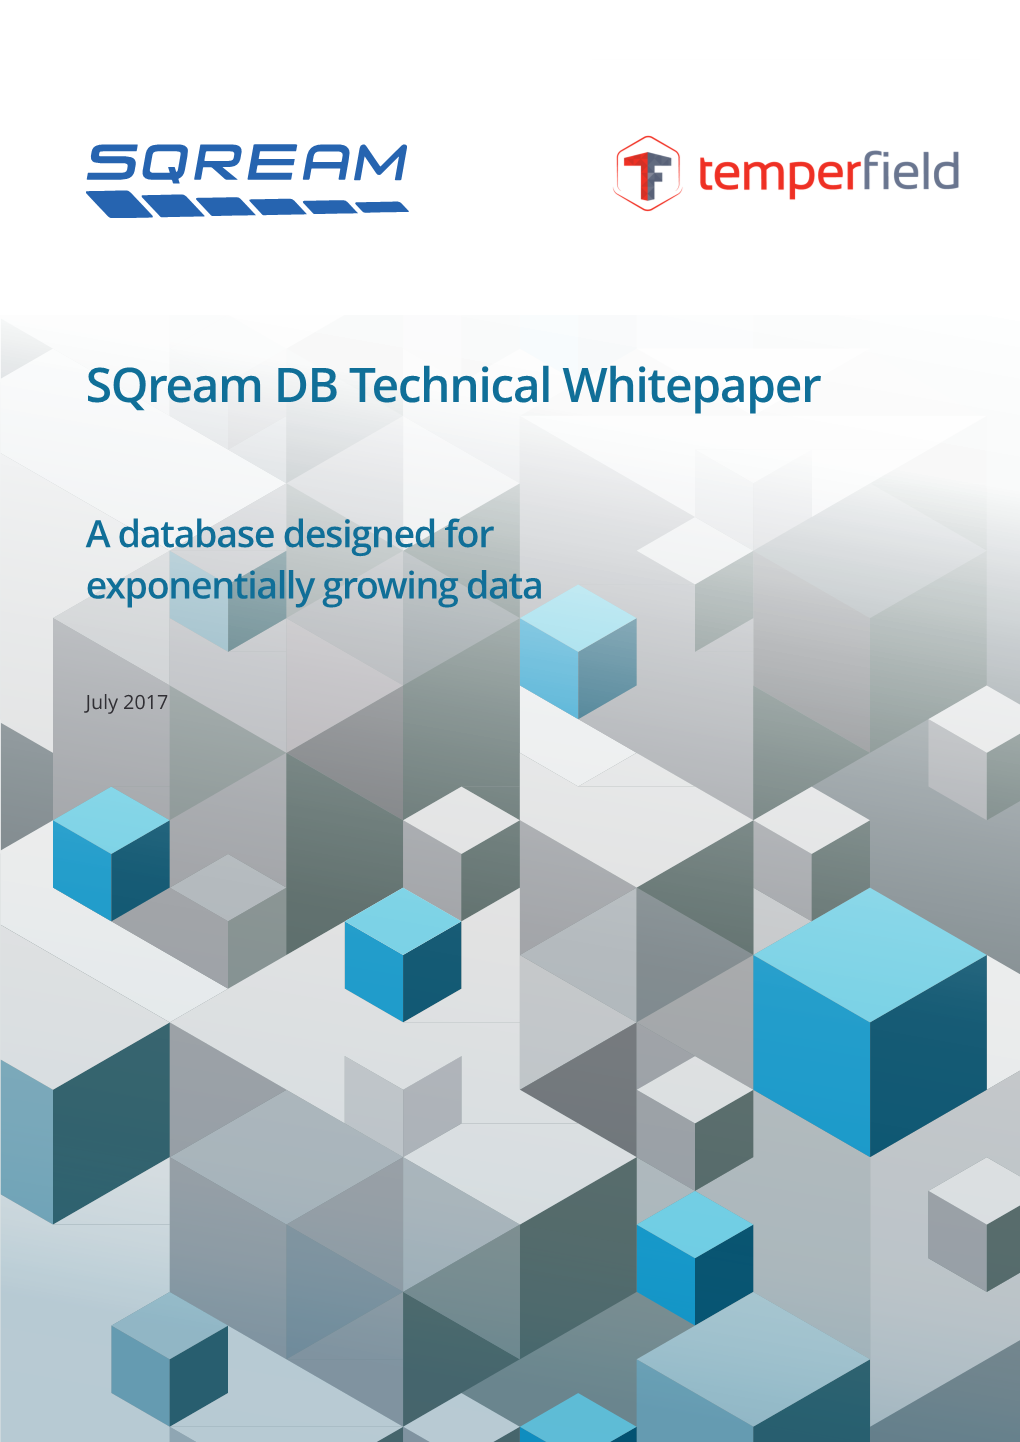 Sqream DB Technical Whitepaper